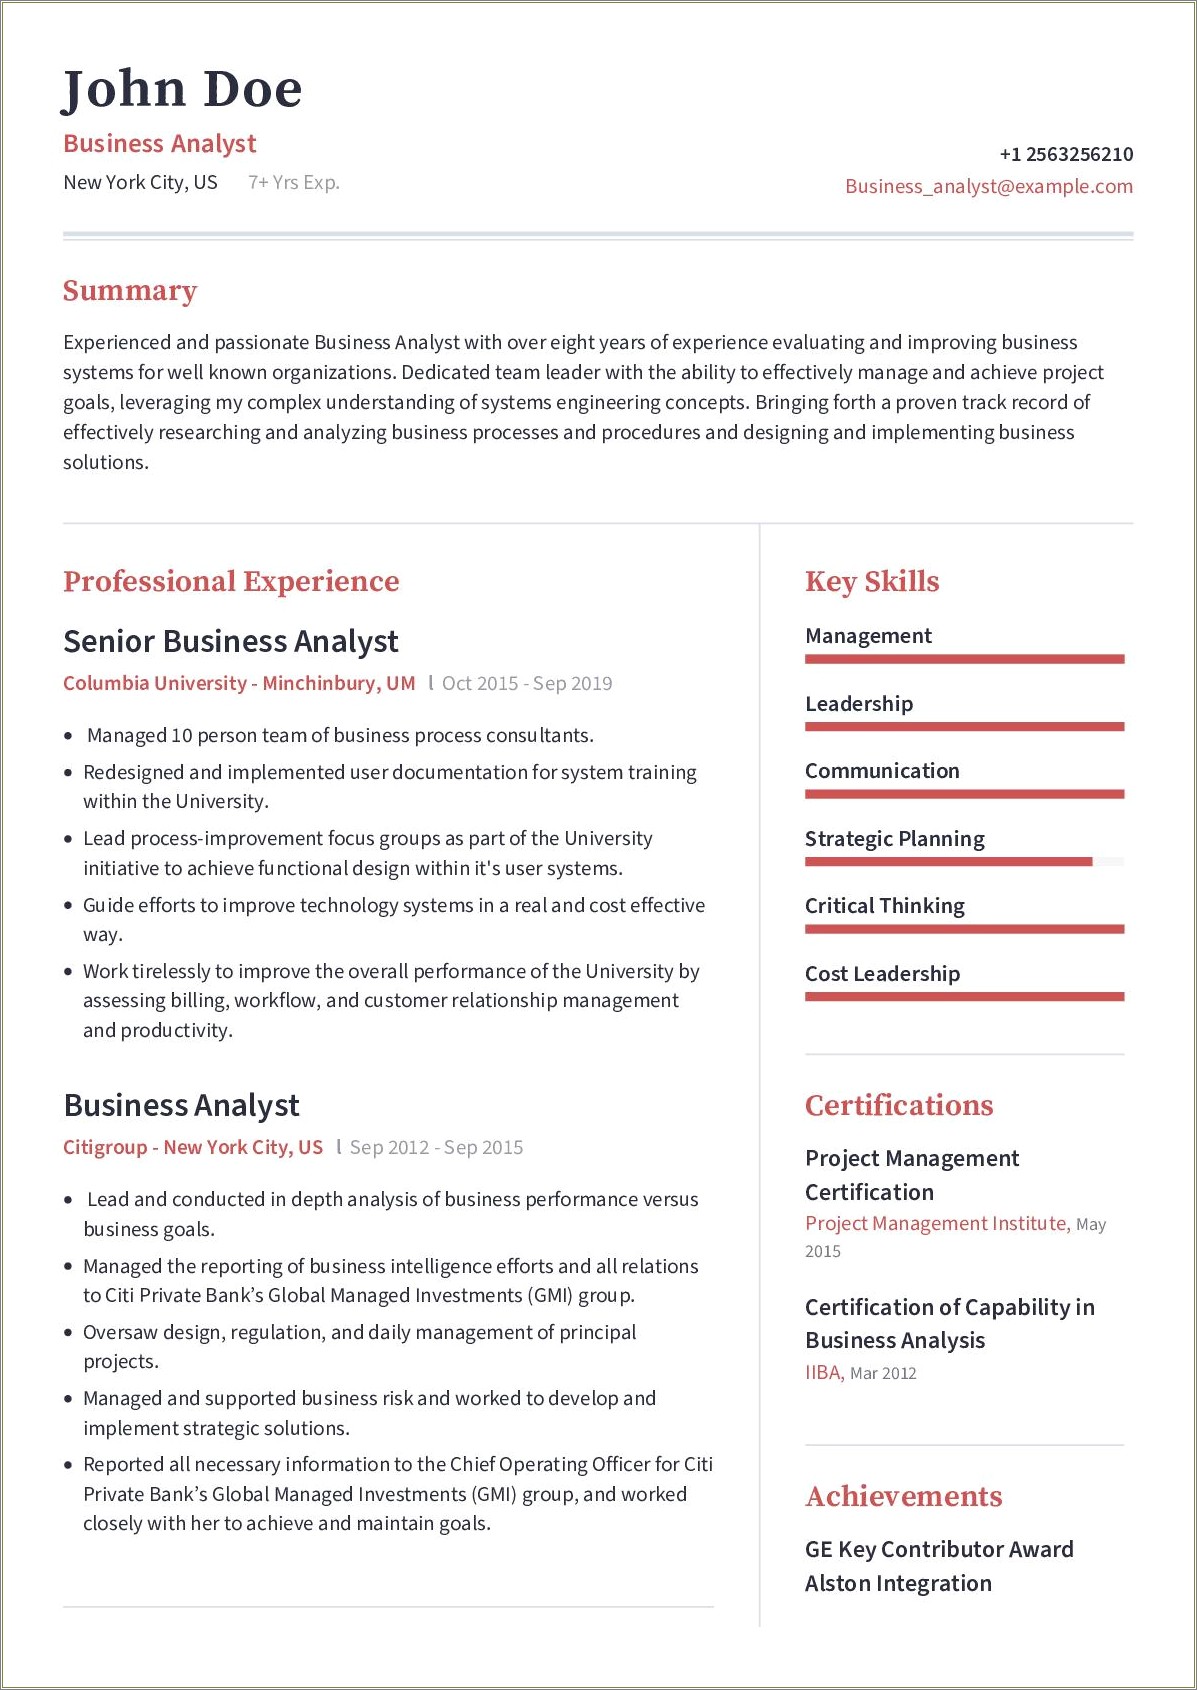 Sample Business Analyst Resume Pdf